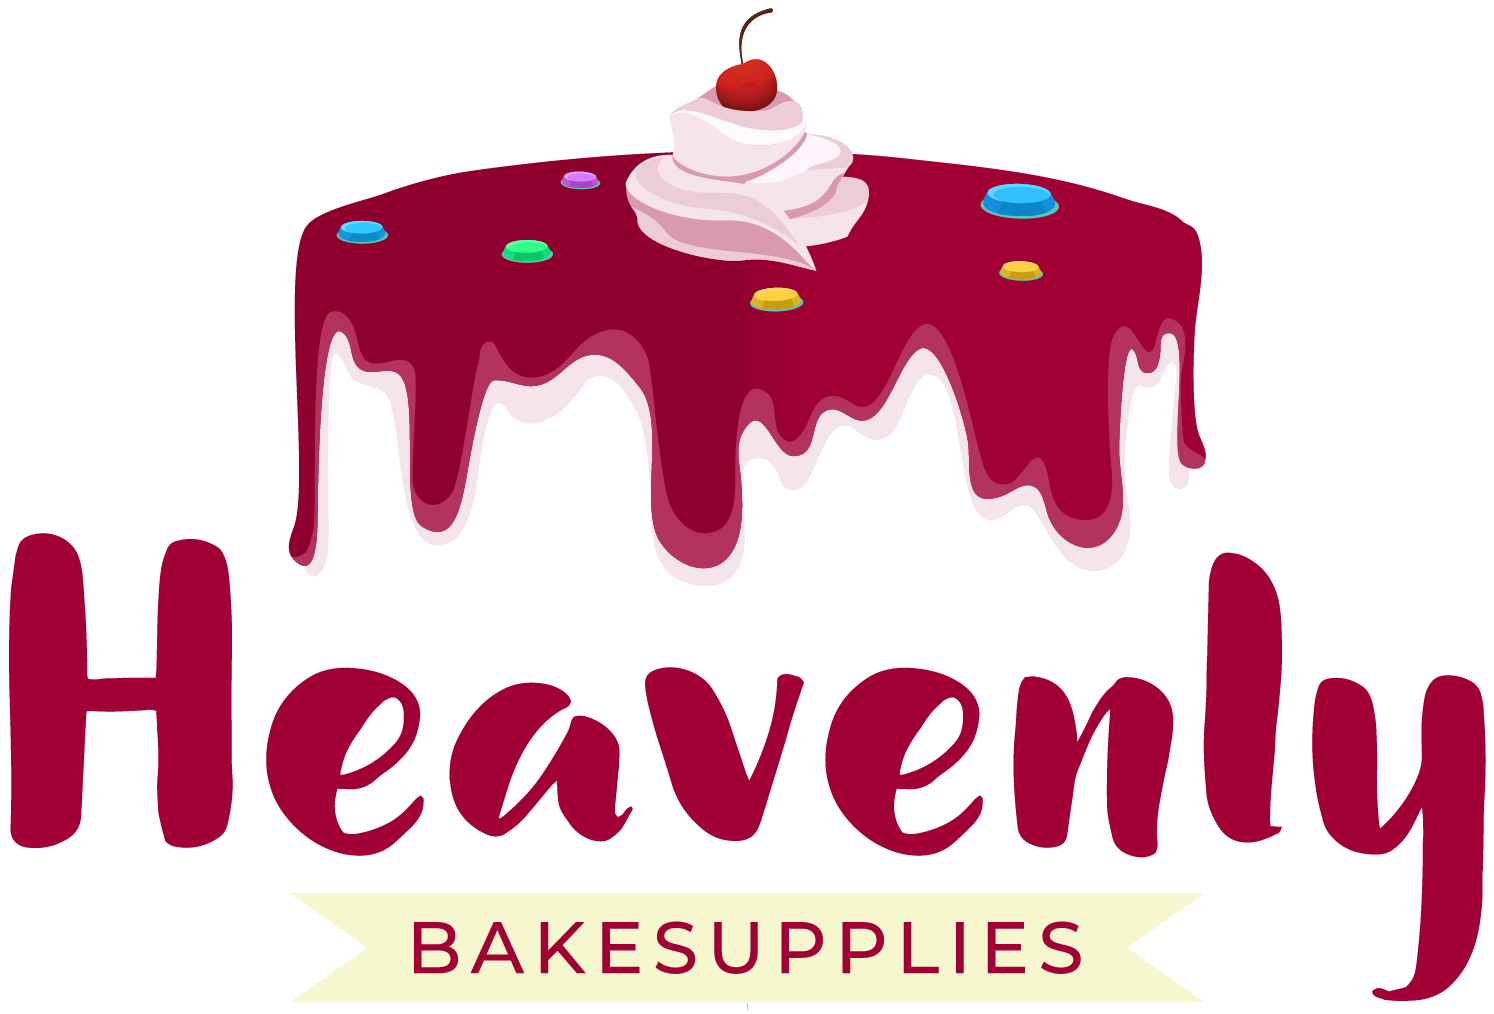 Heavenly Bake Supplies